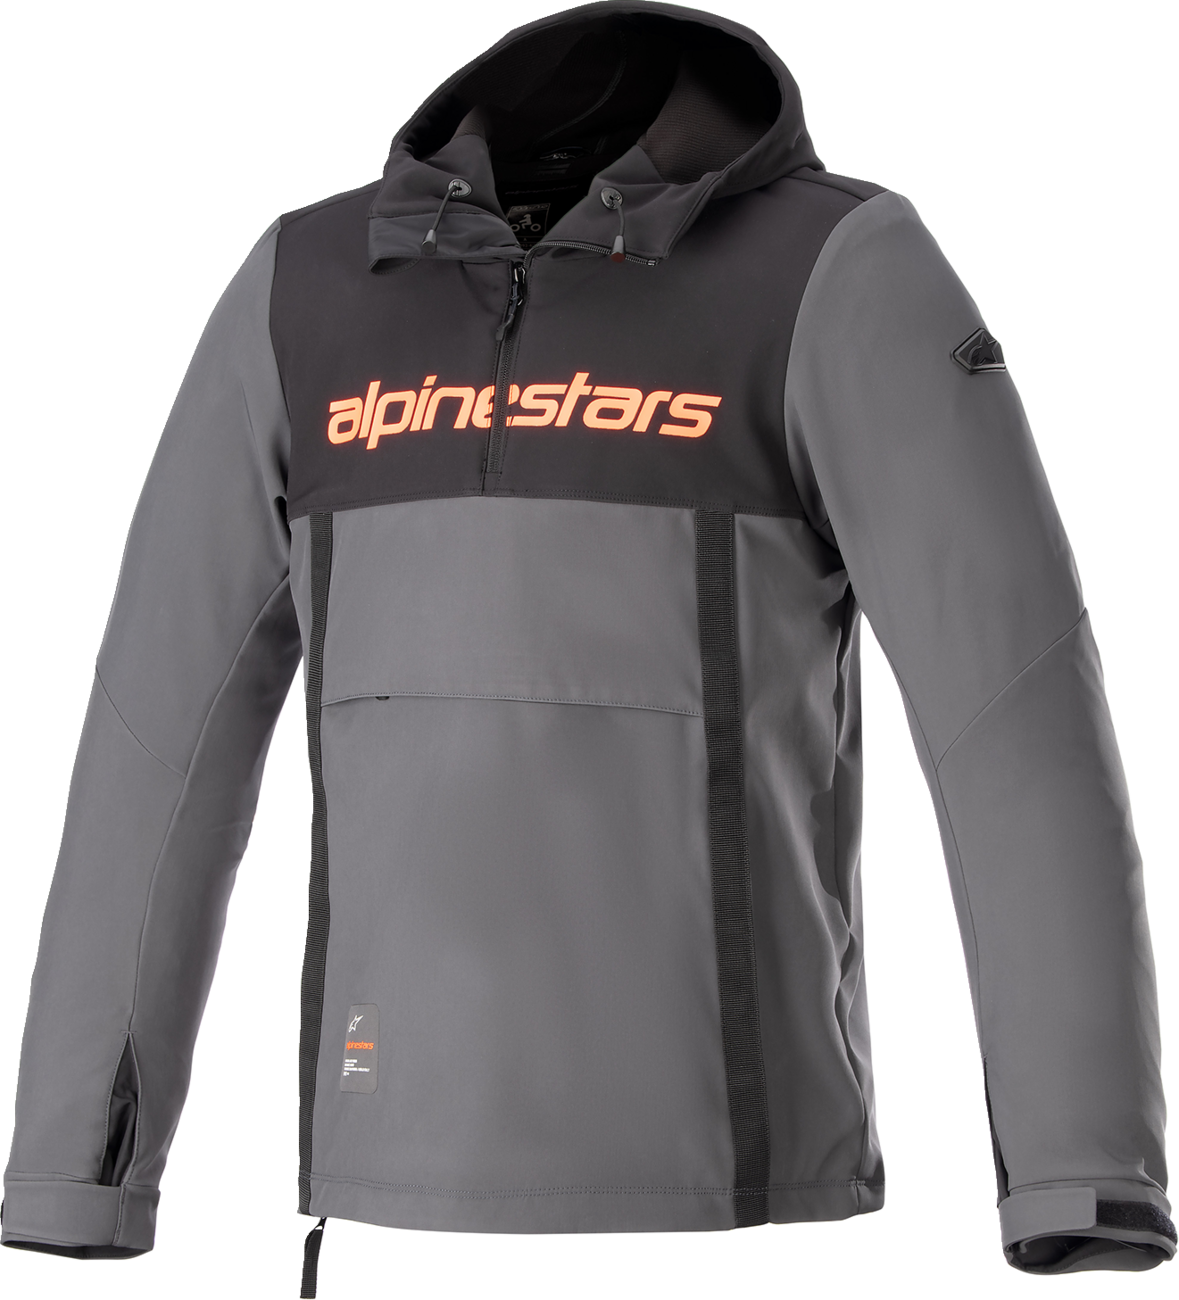 ALPINESTARS Sherpa Jacket - Black/Gray - 4XL 4208123-1134-4X